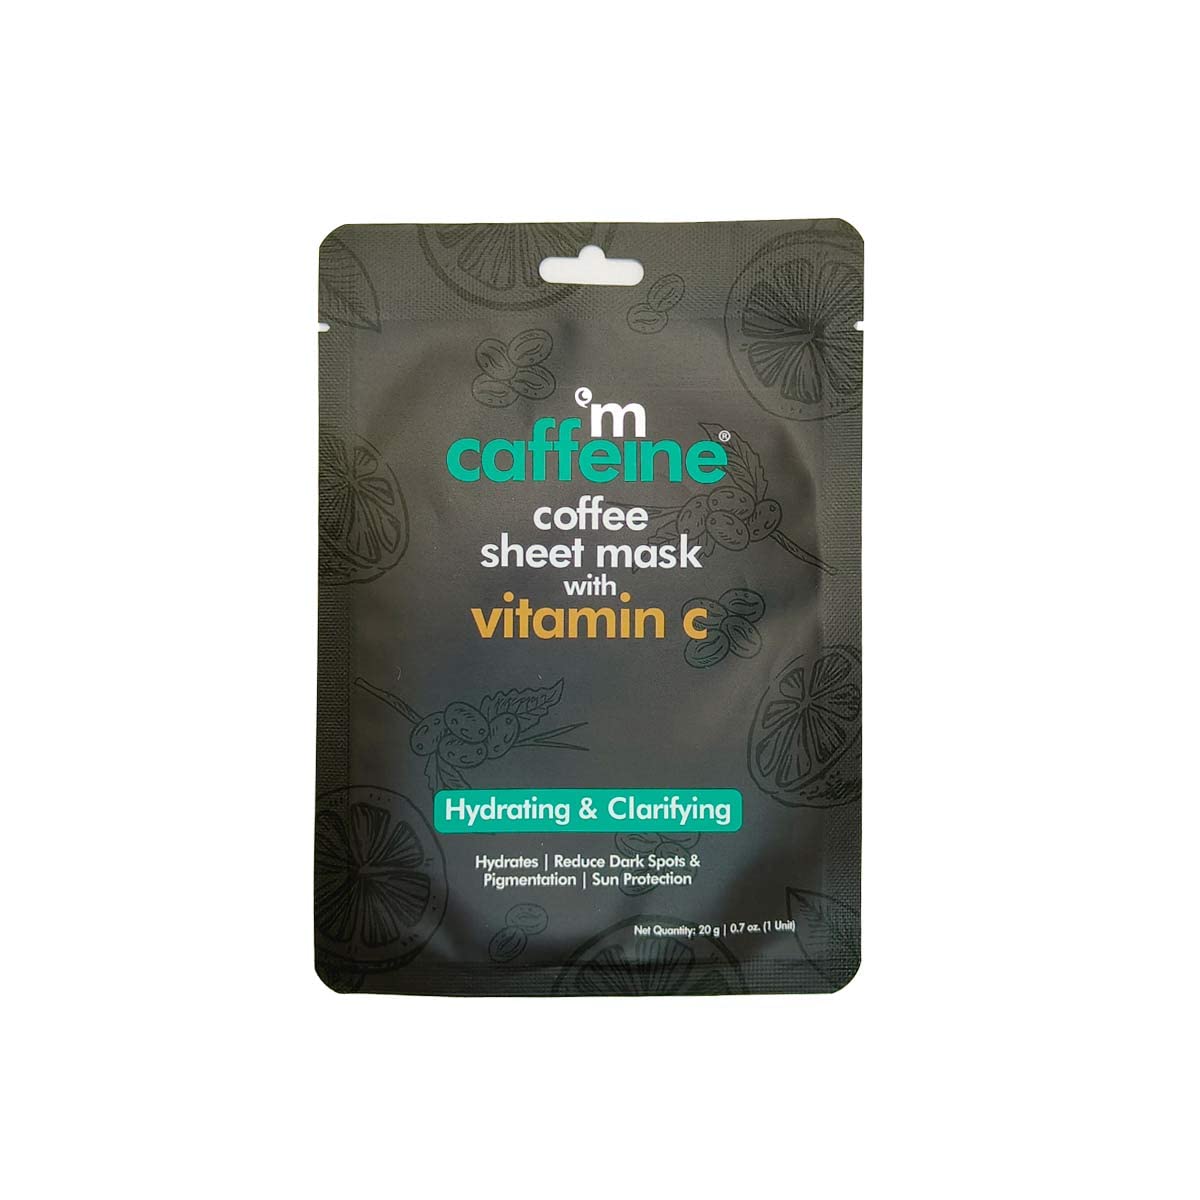 mCaffeine Coffee Sheet Mask with Vitamin C